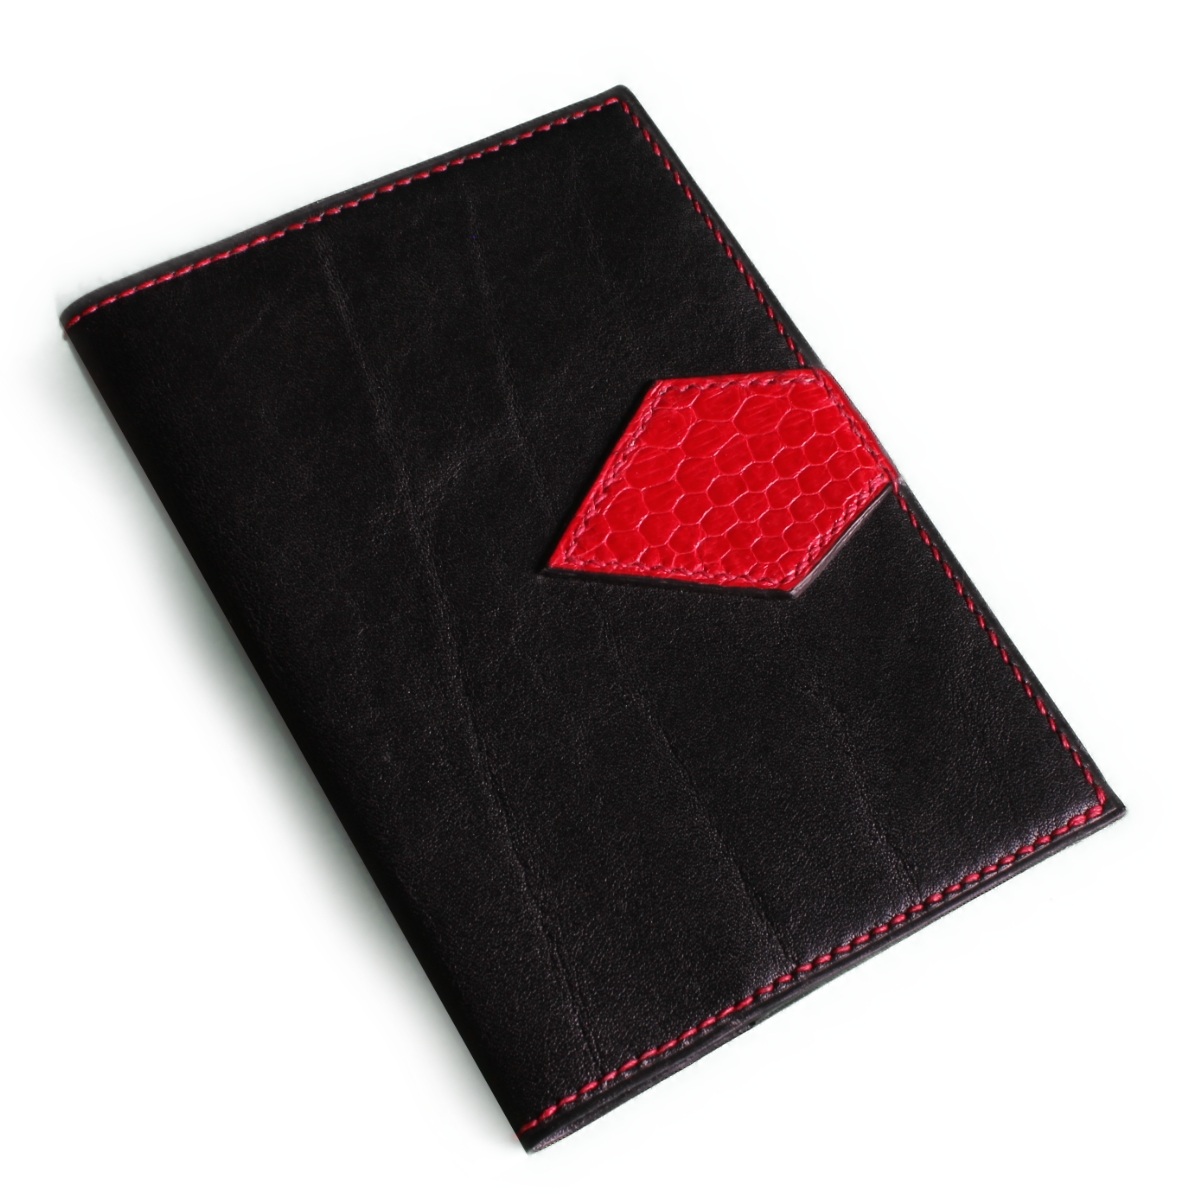 Crivellaro  maroquinerie  porte passeport noir rouge